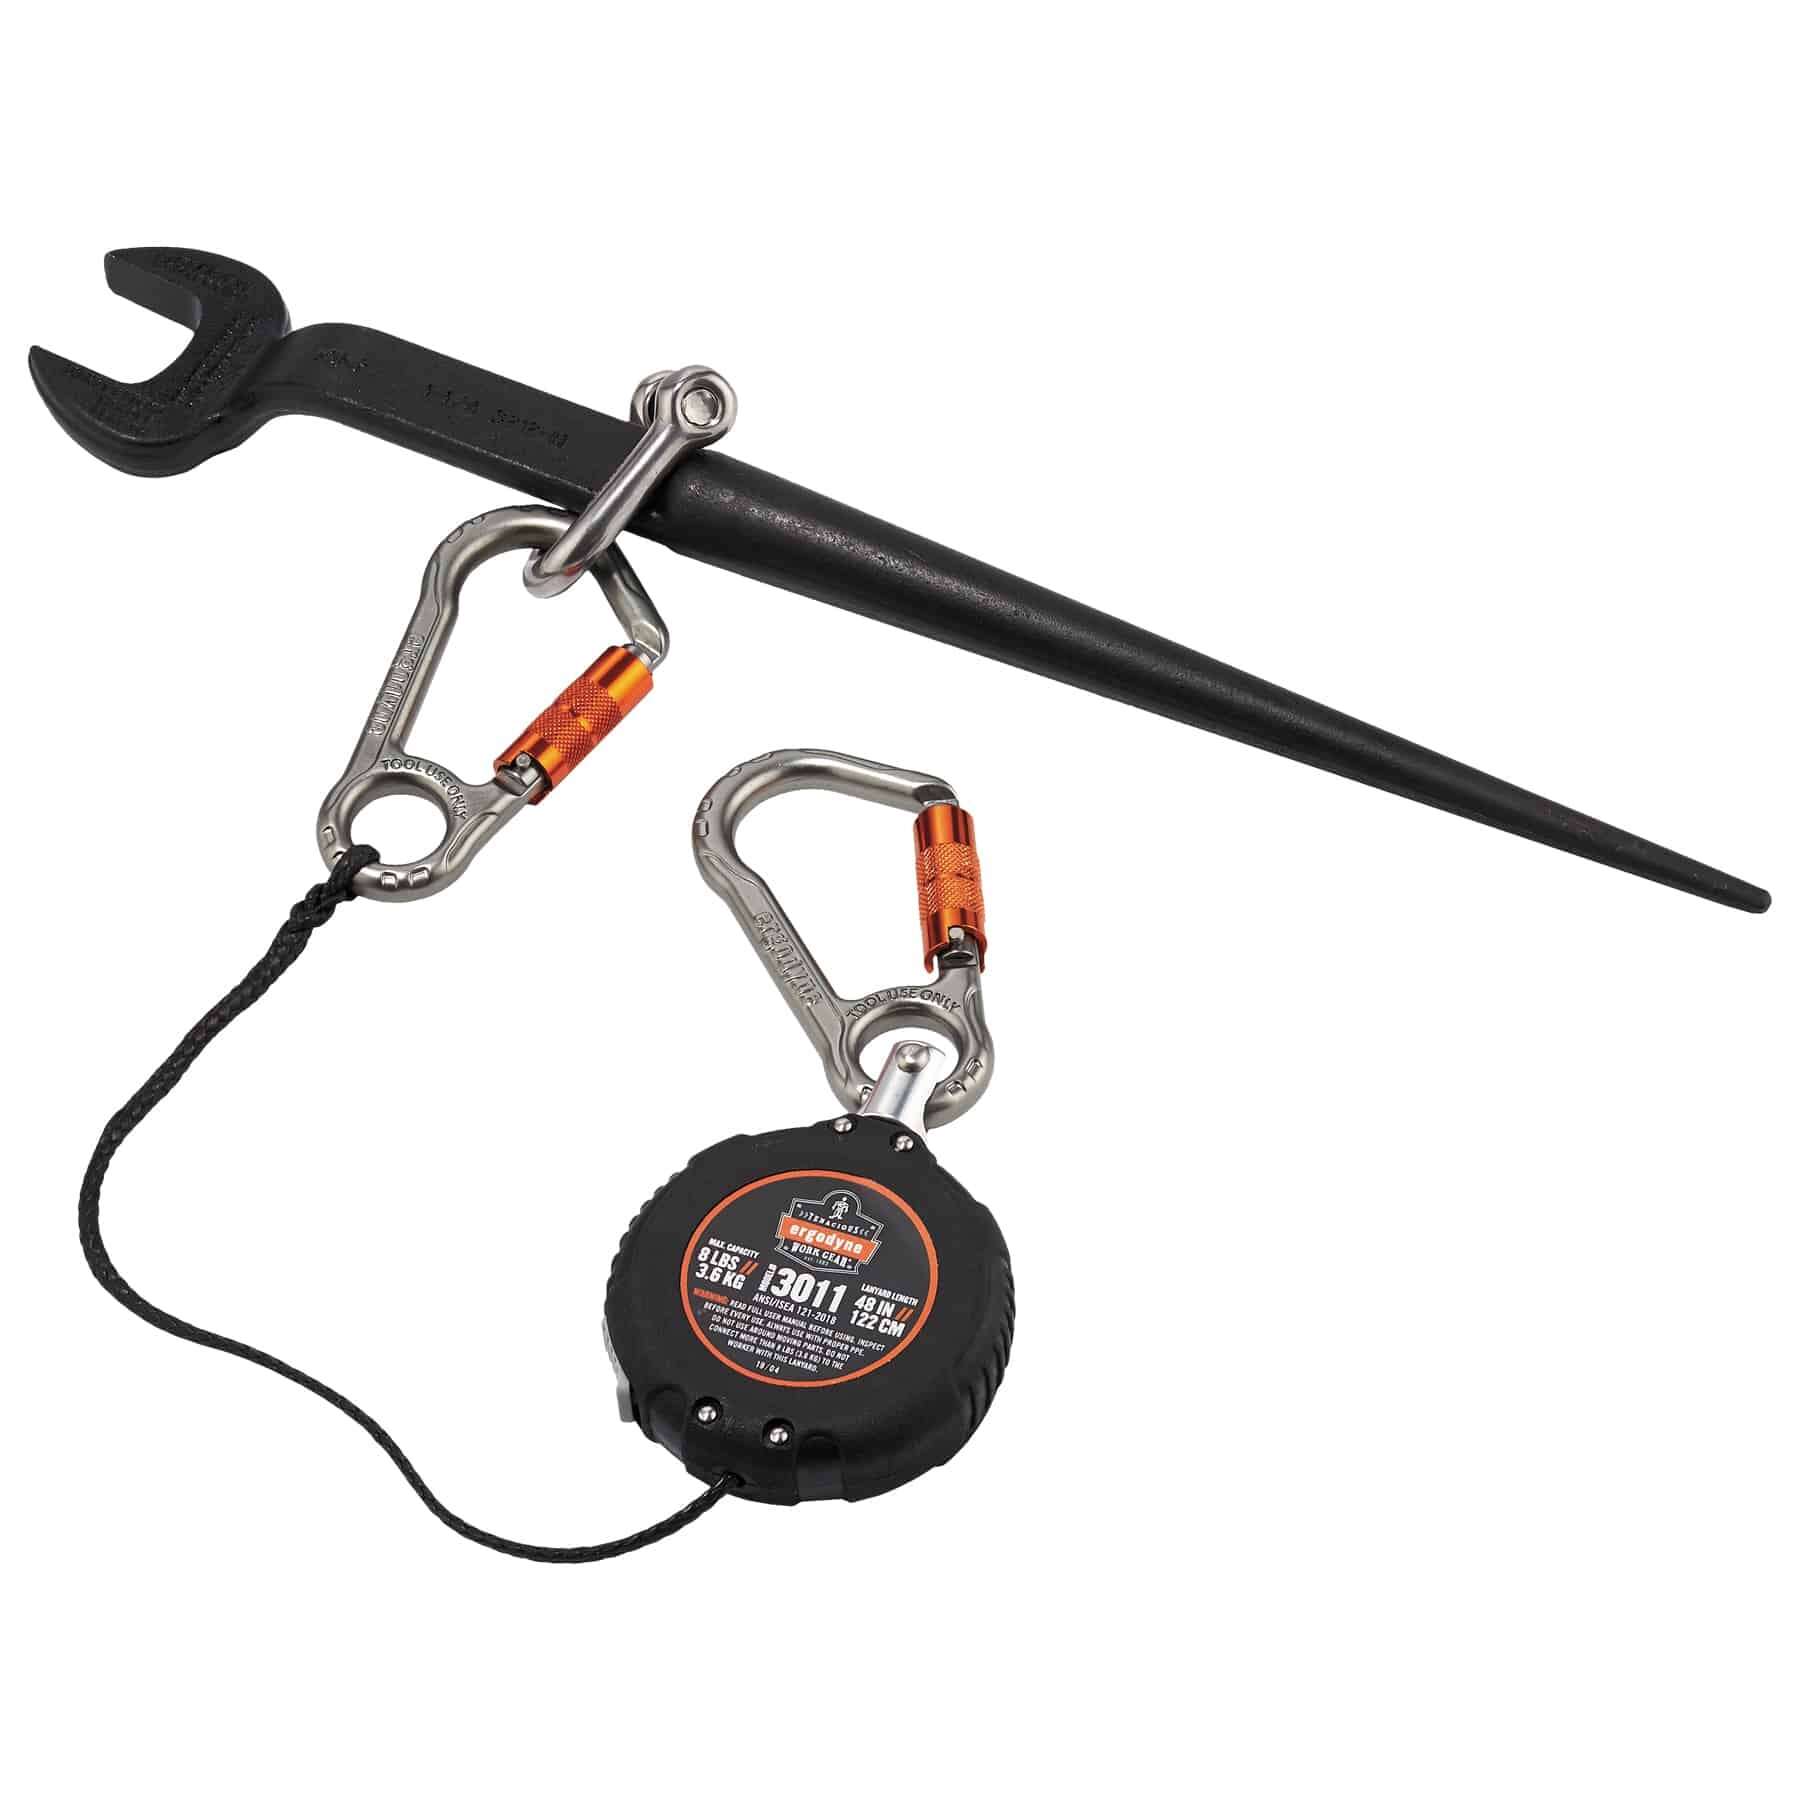 Ergodyne 3104FX Squids Tool Lanyard with Carabiner and Chooke Loop